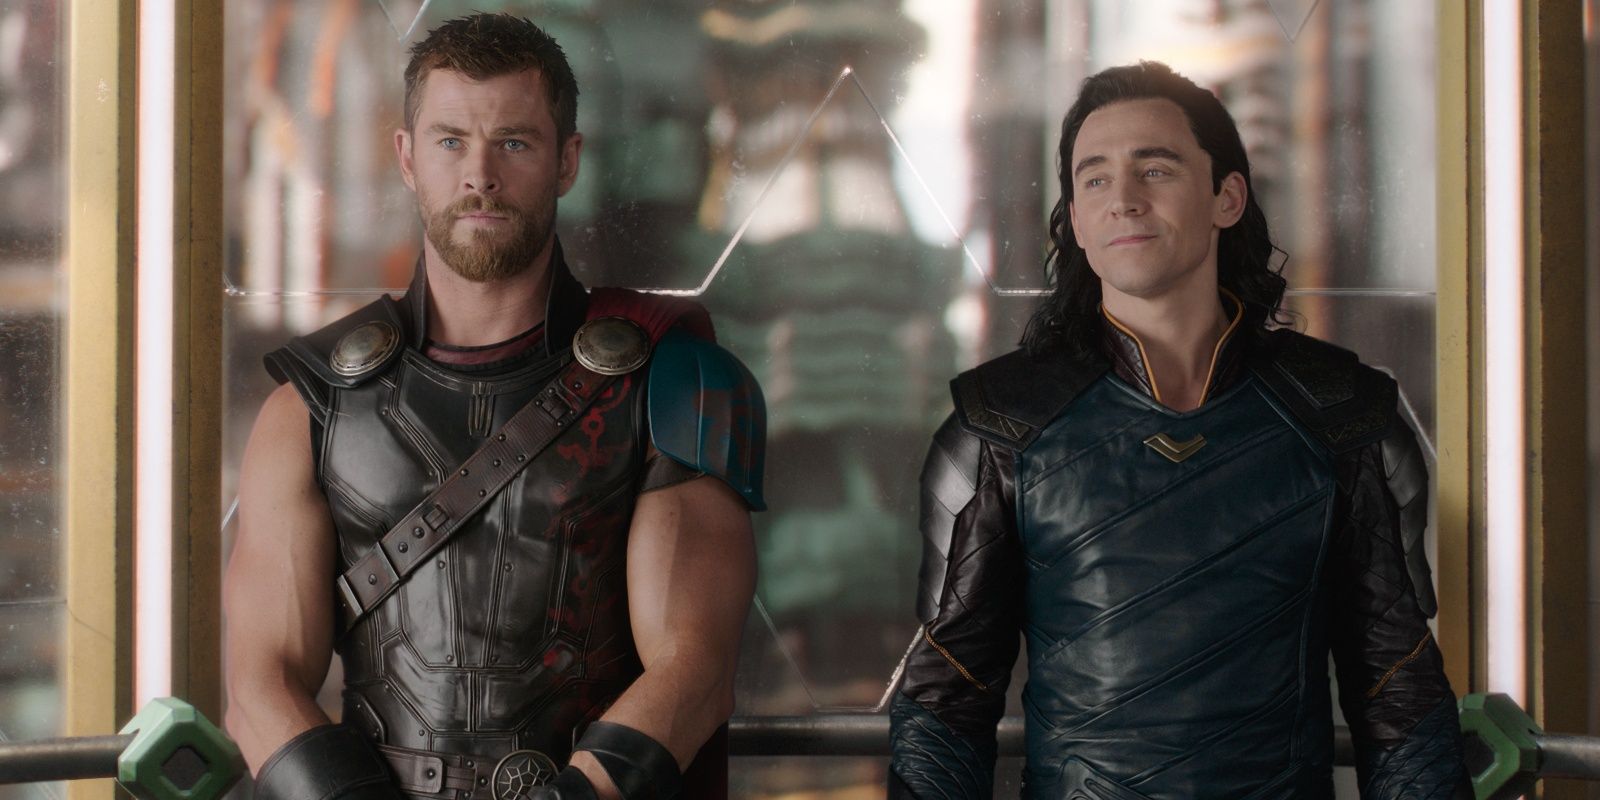 Thor and Loki in elevator in Thor Ragnarok